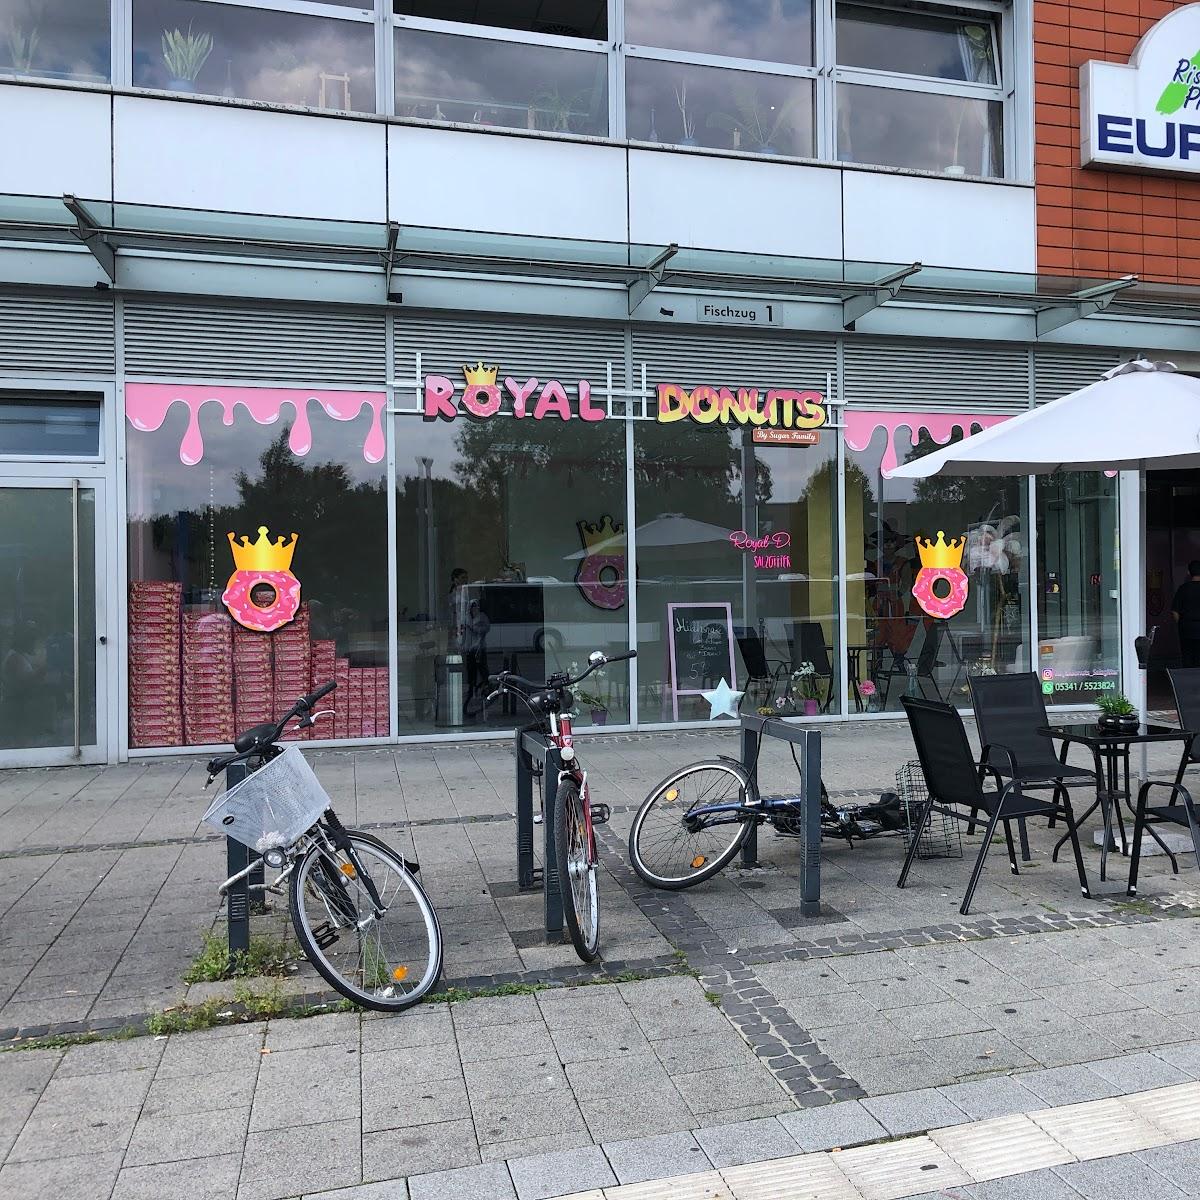 Restaurant "Royal Donuts" in Salzgitter